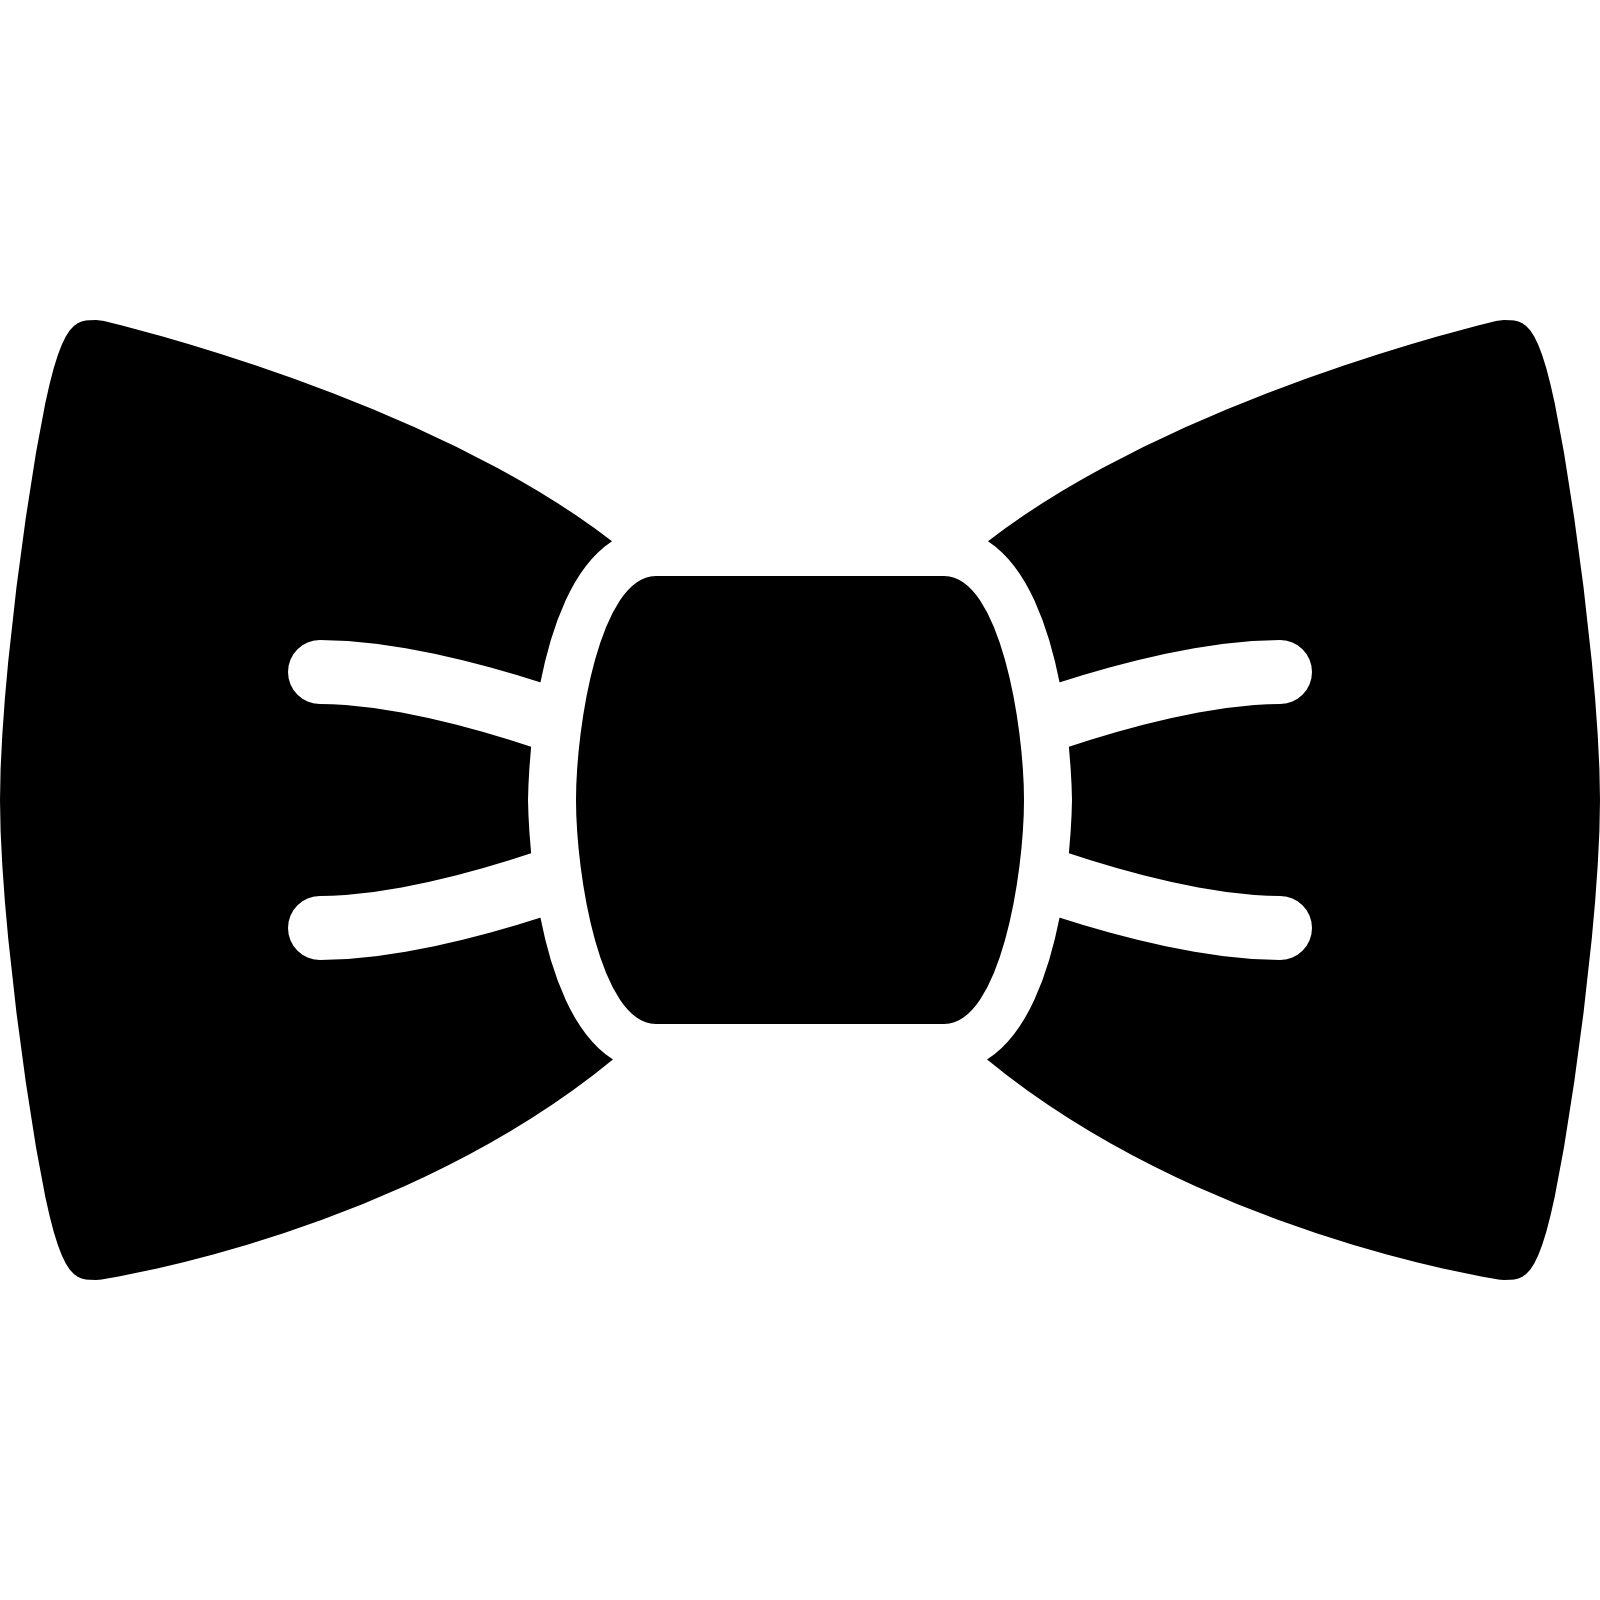 Bow tie Computer Icons Necktie Black tie Clip art - dress png download